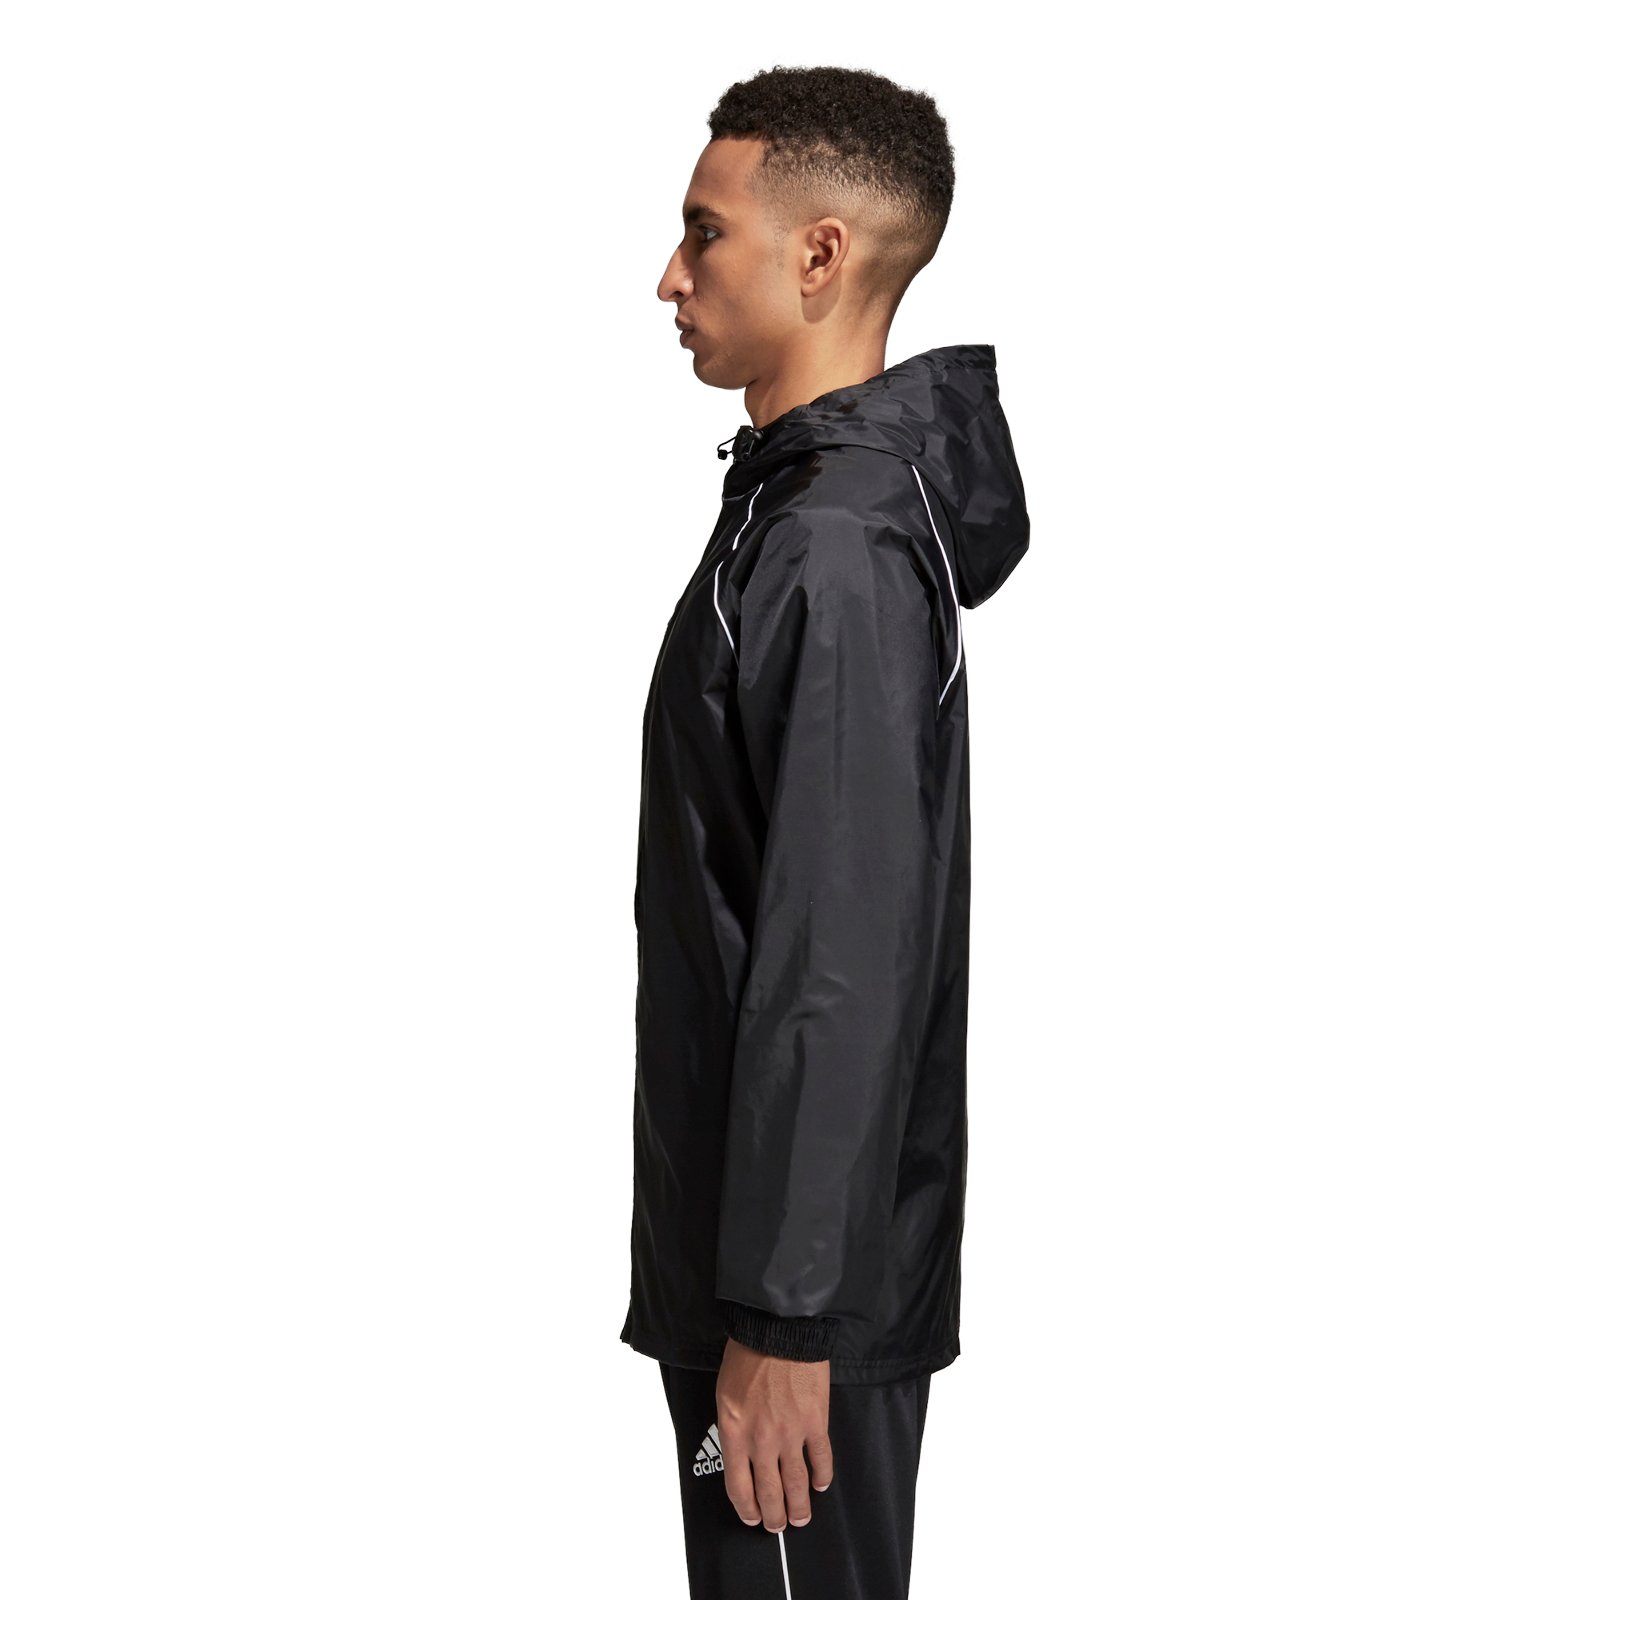 Adidas Core 18 Rain Jacket